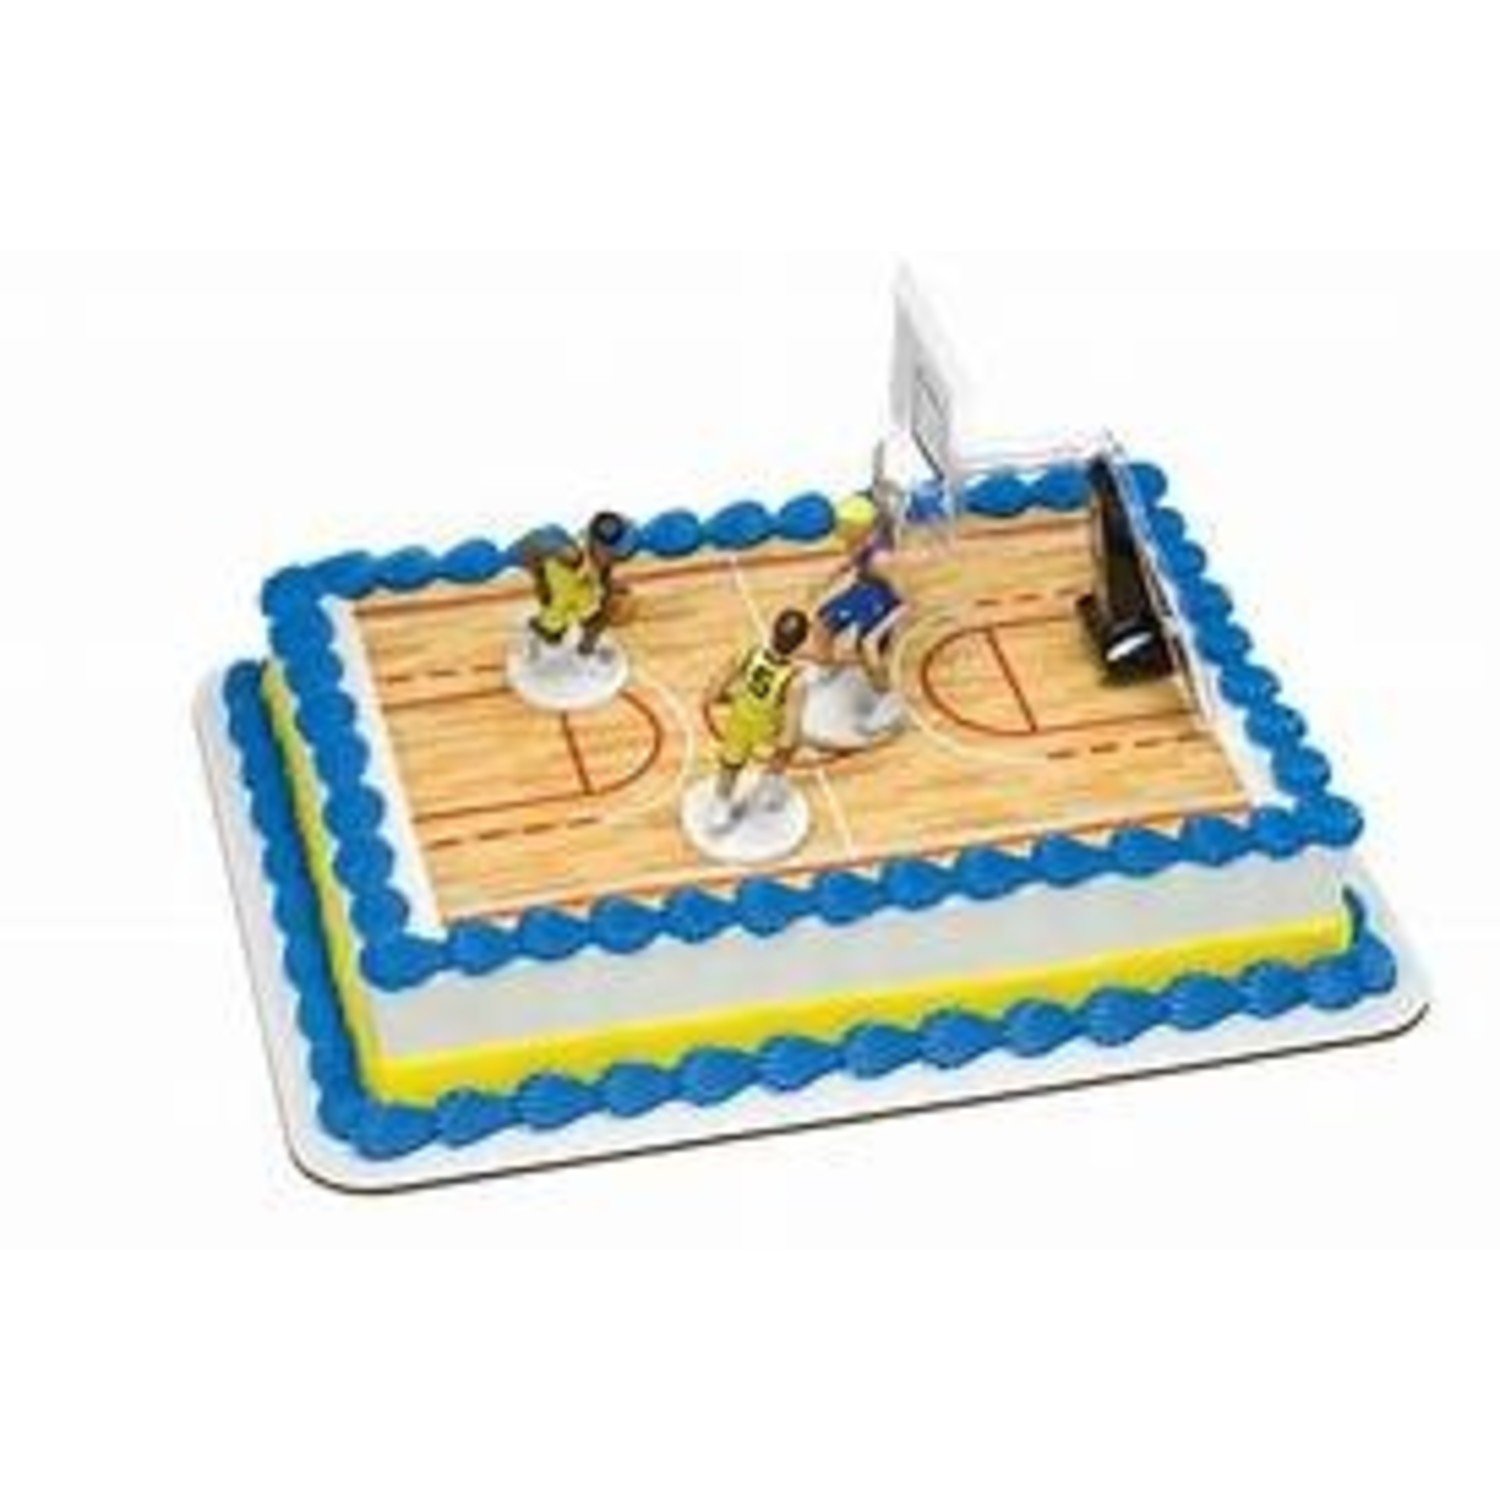 Boys Birthday Cakes | Resch's Bakery, Columbus Ohio